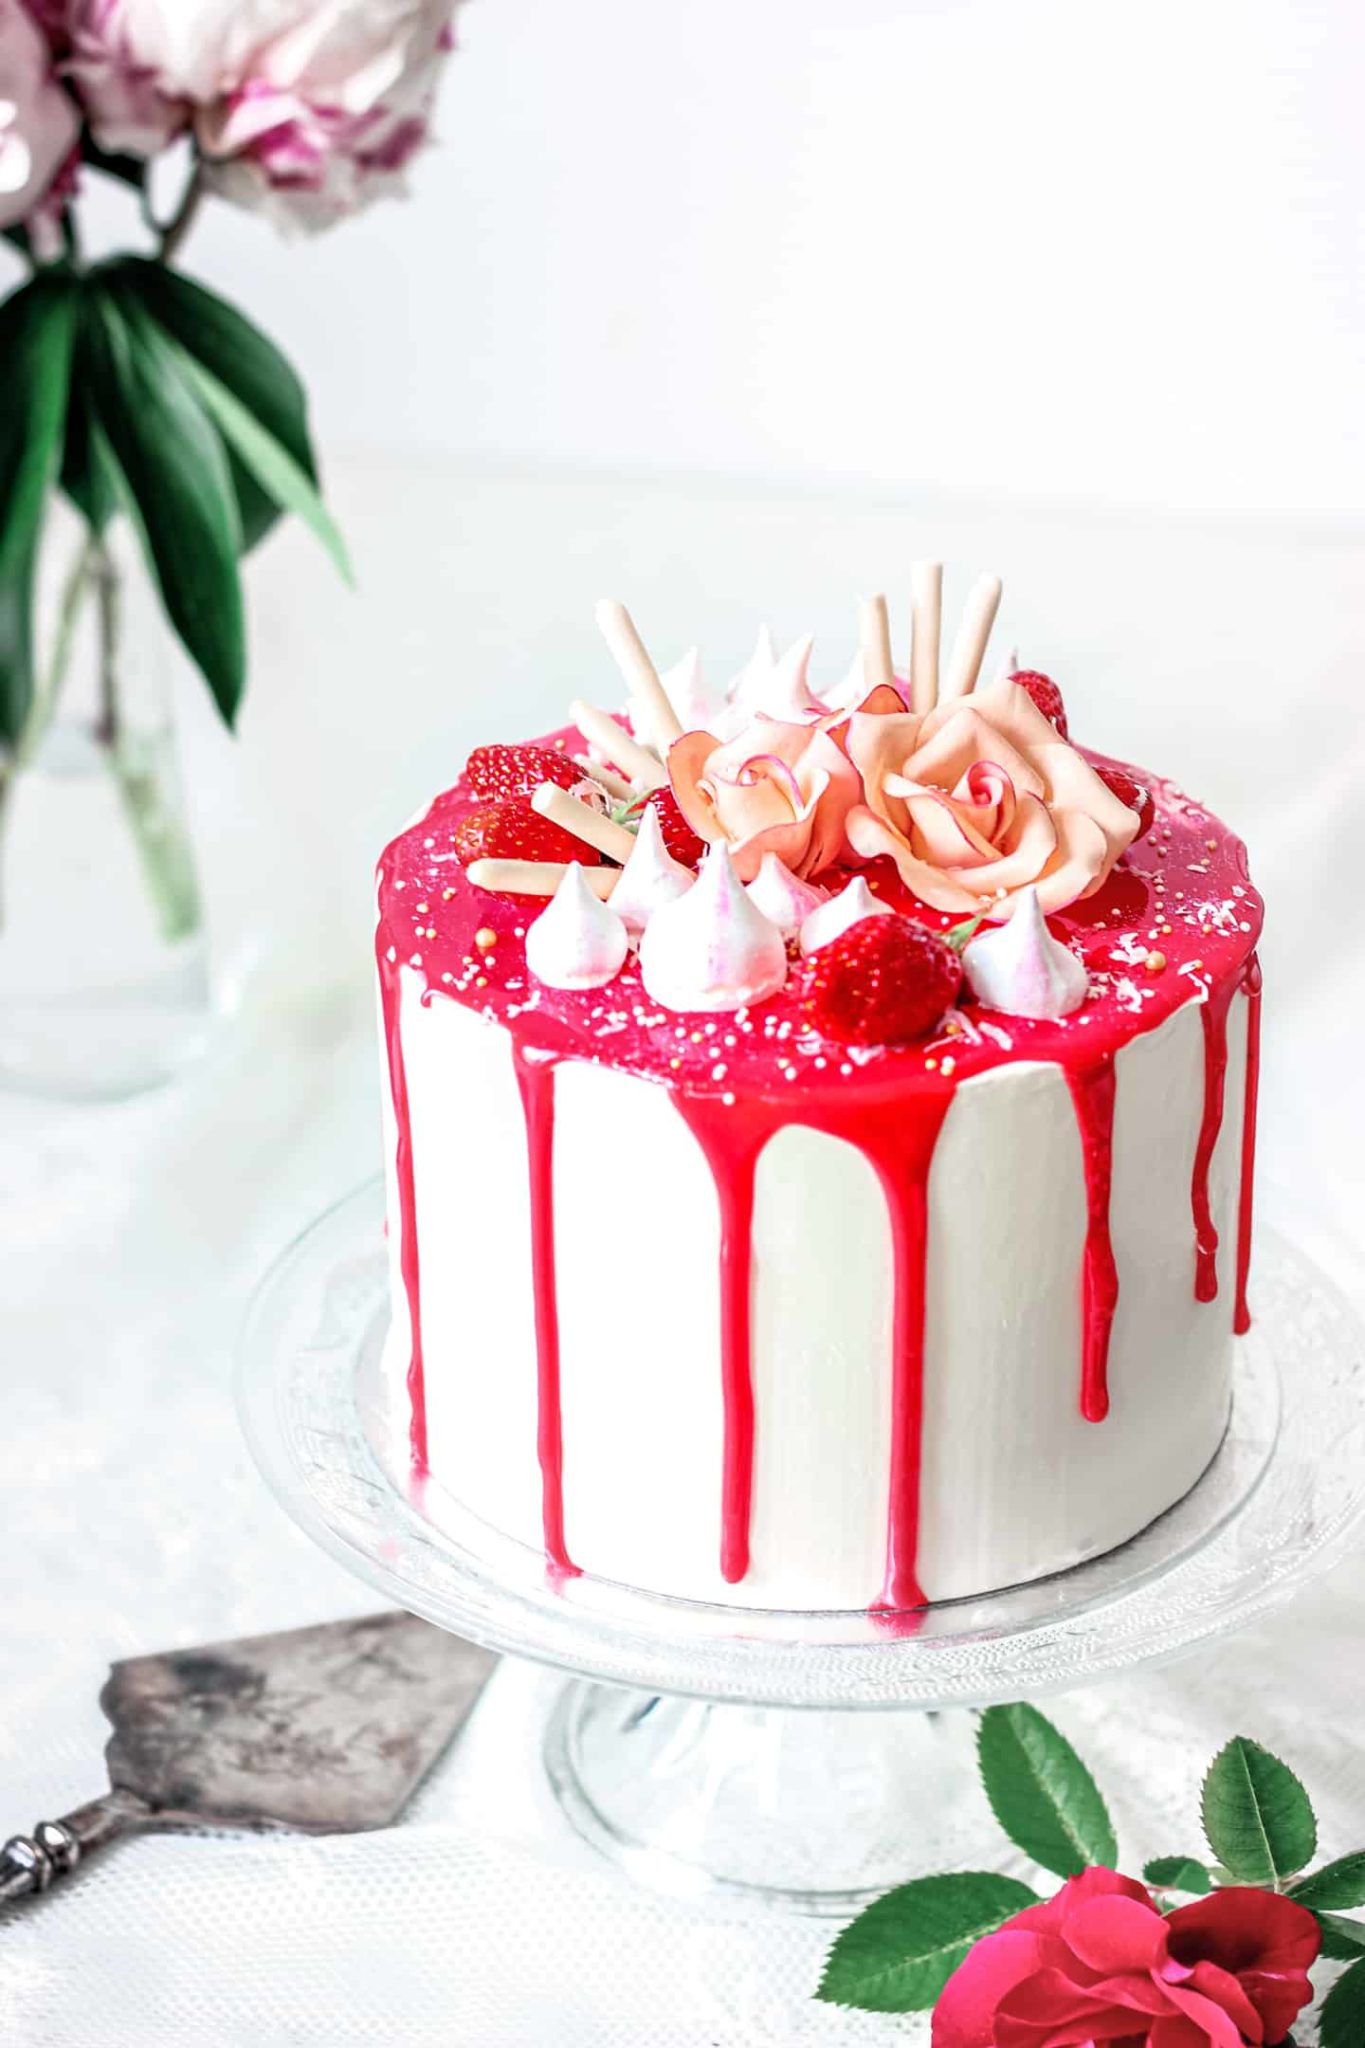 Layer cake vanille fraise